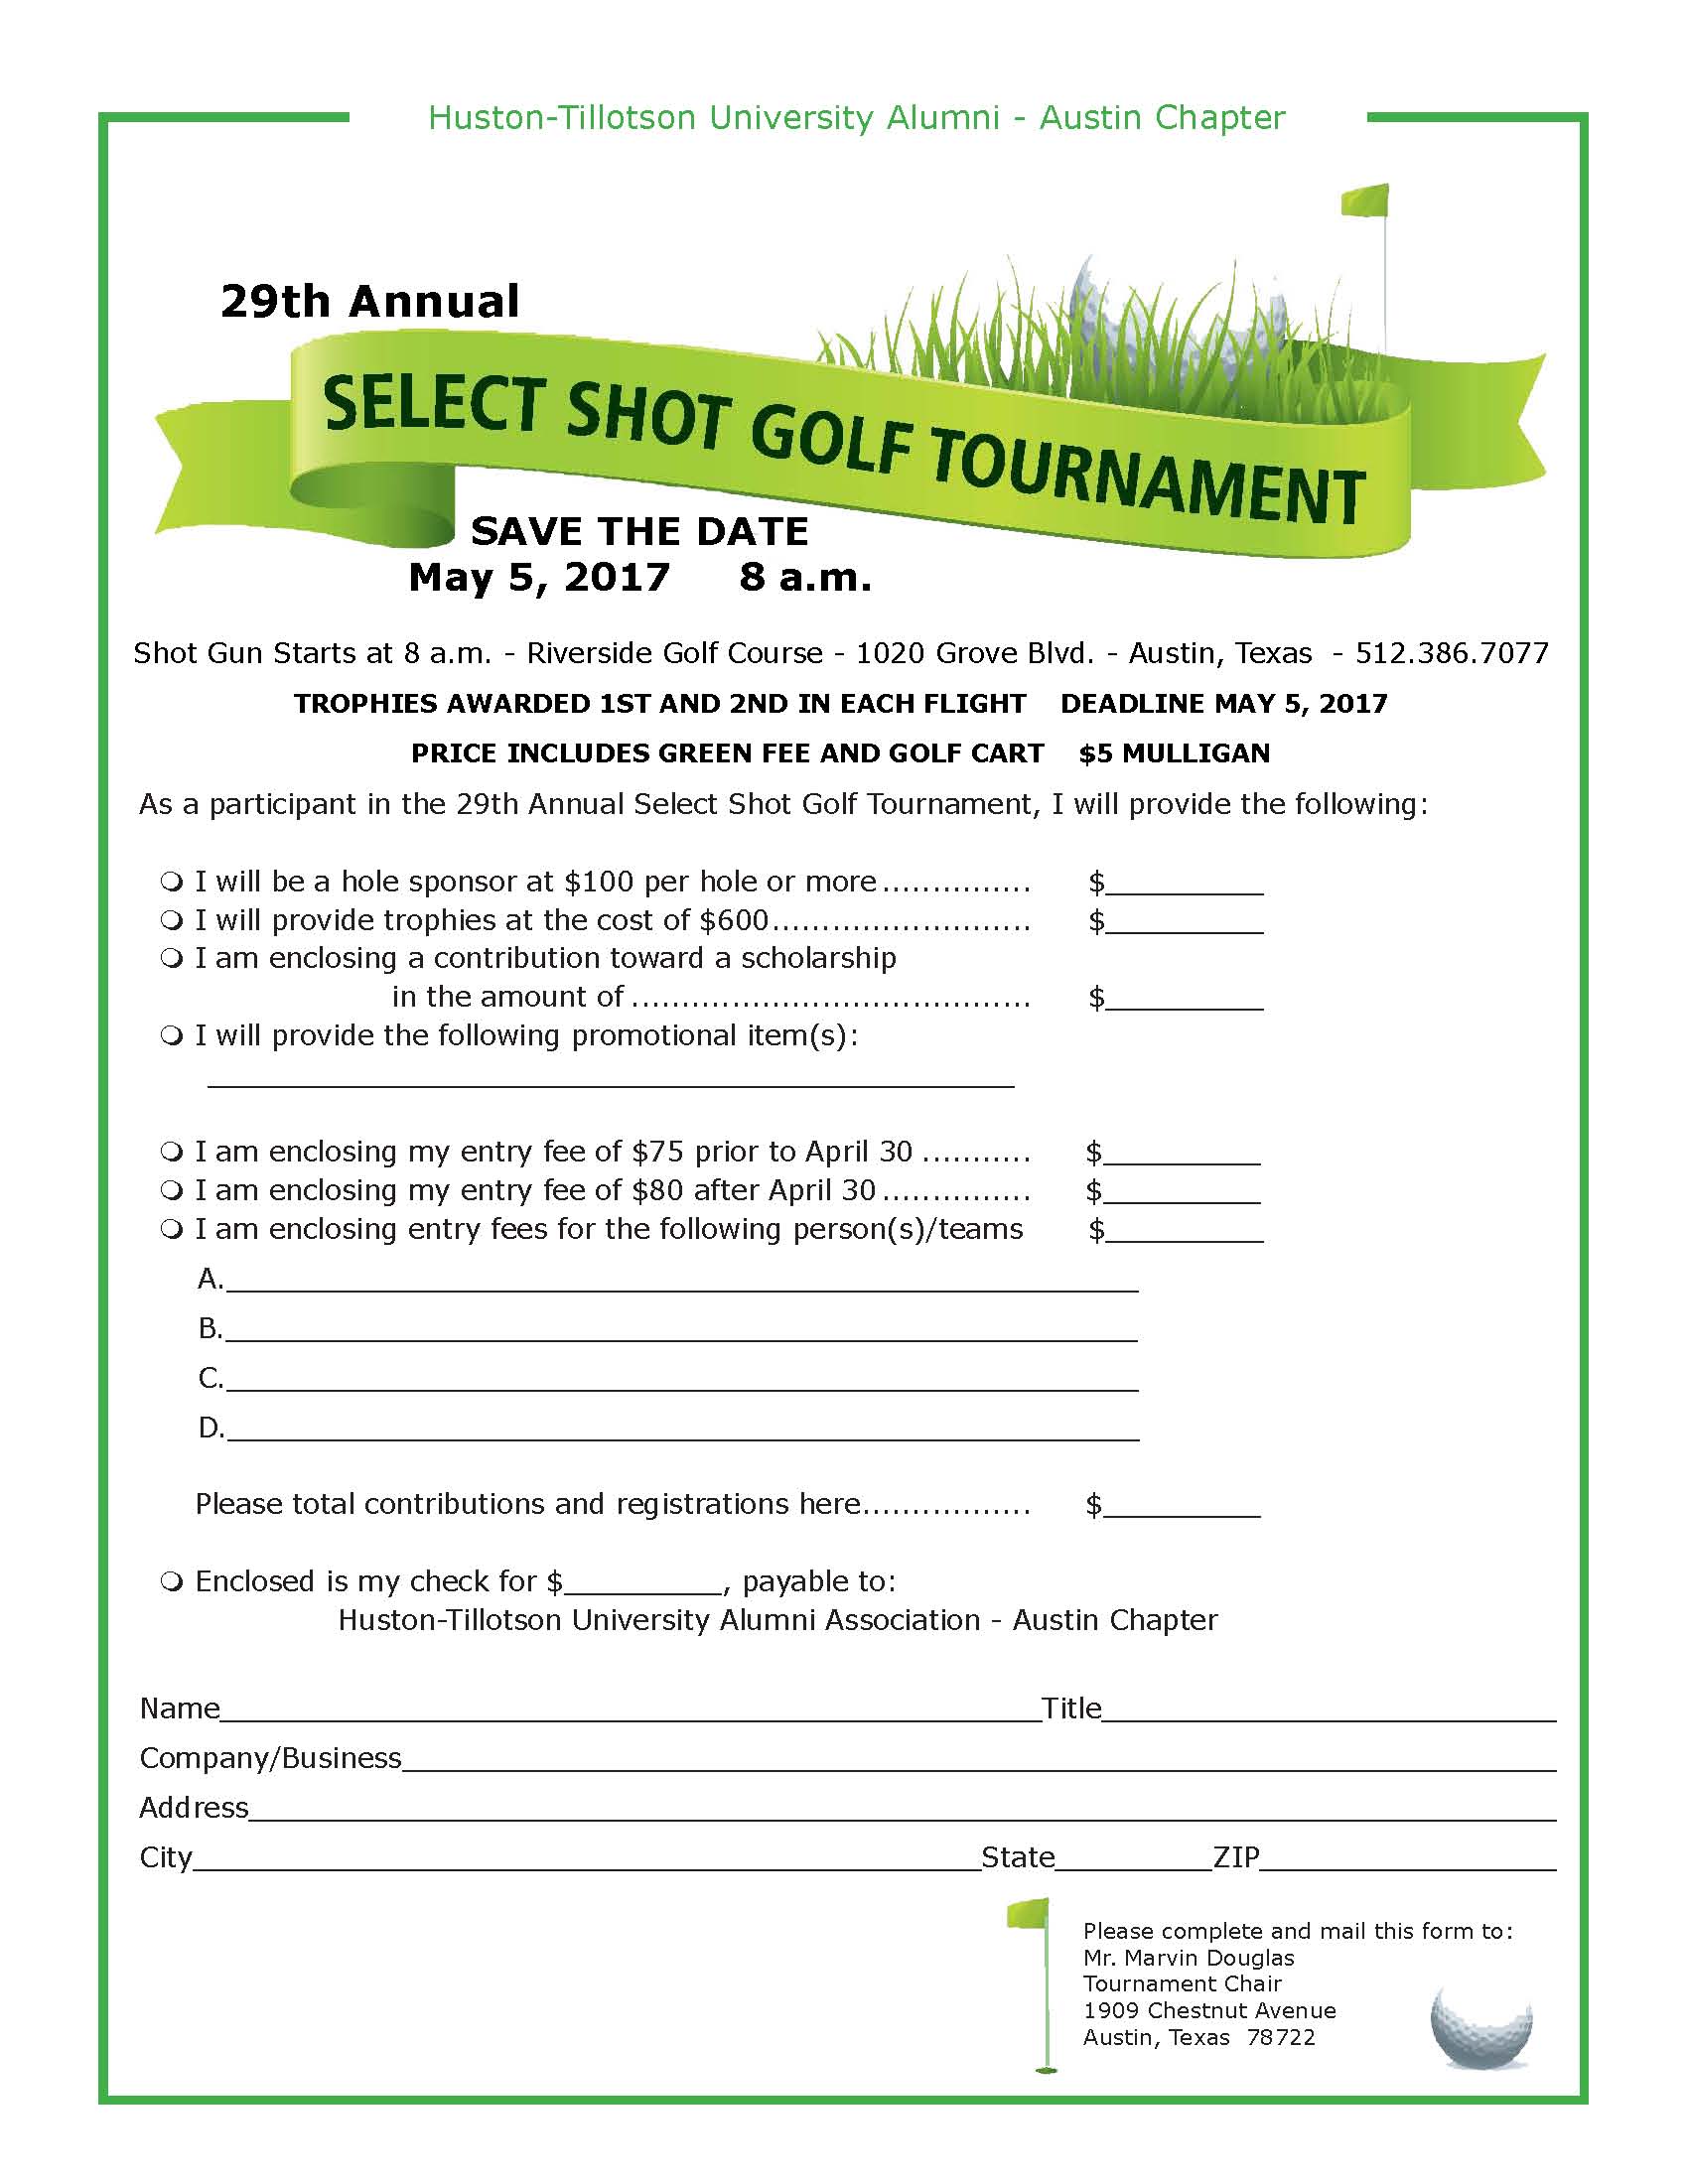 GolfTournament2017